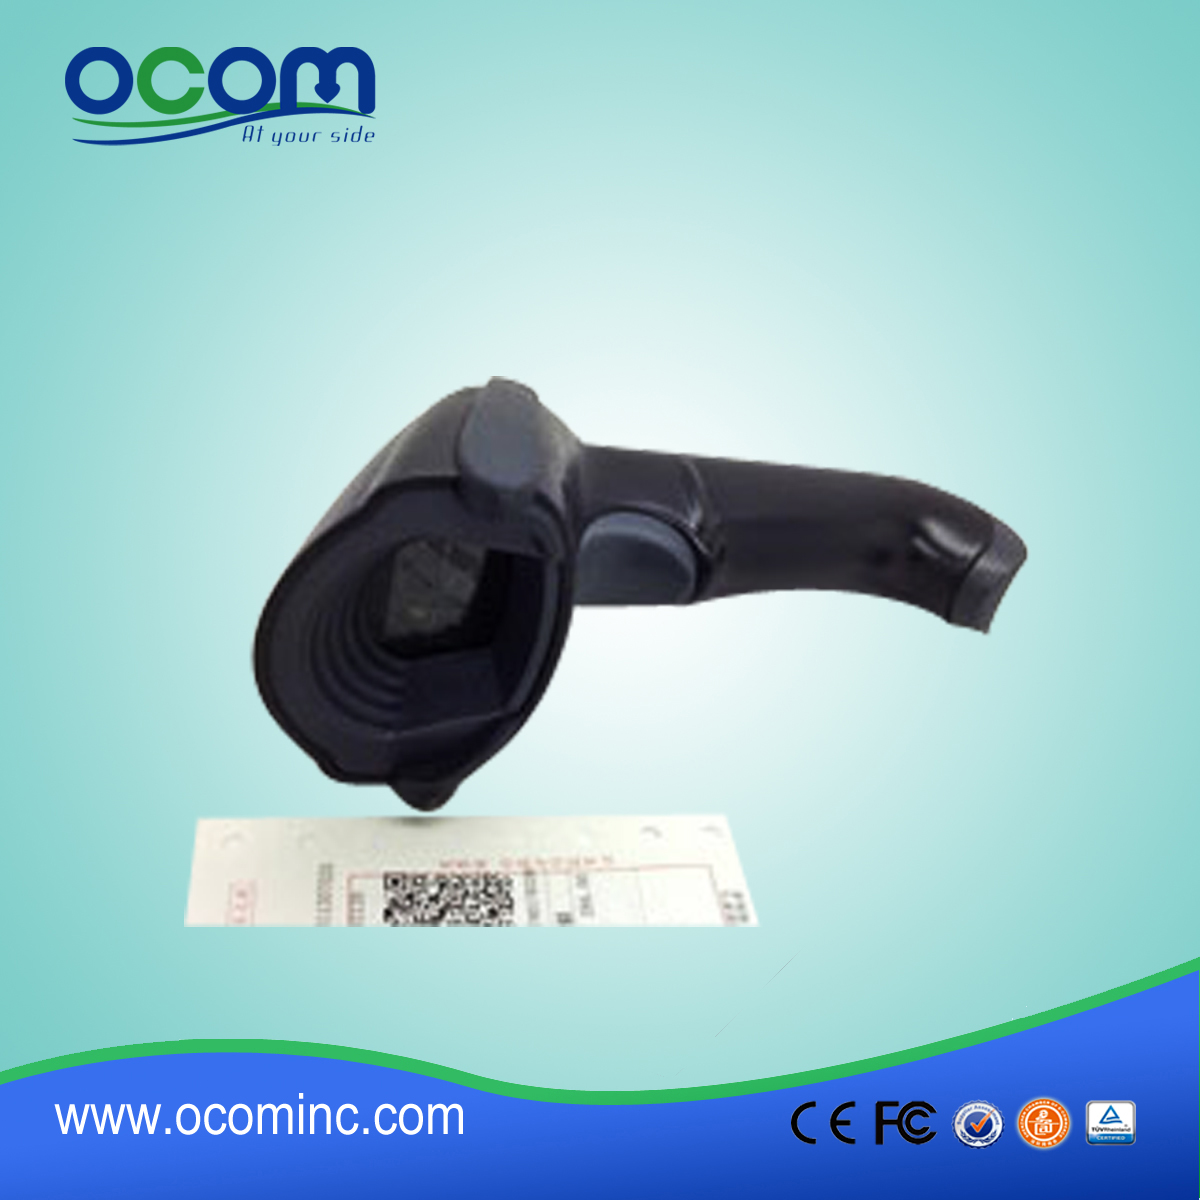 Baixo preço Barcode Scanner 2D - OCBs-2006